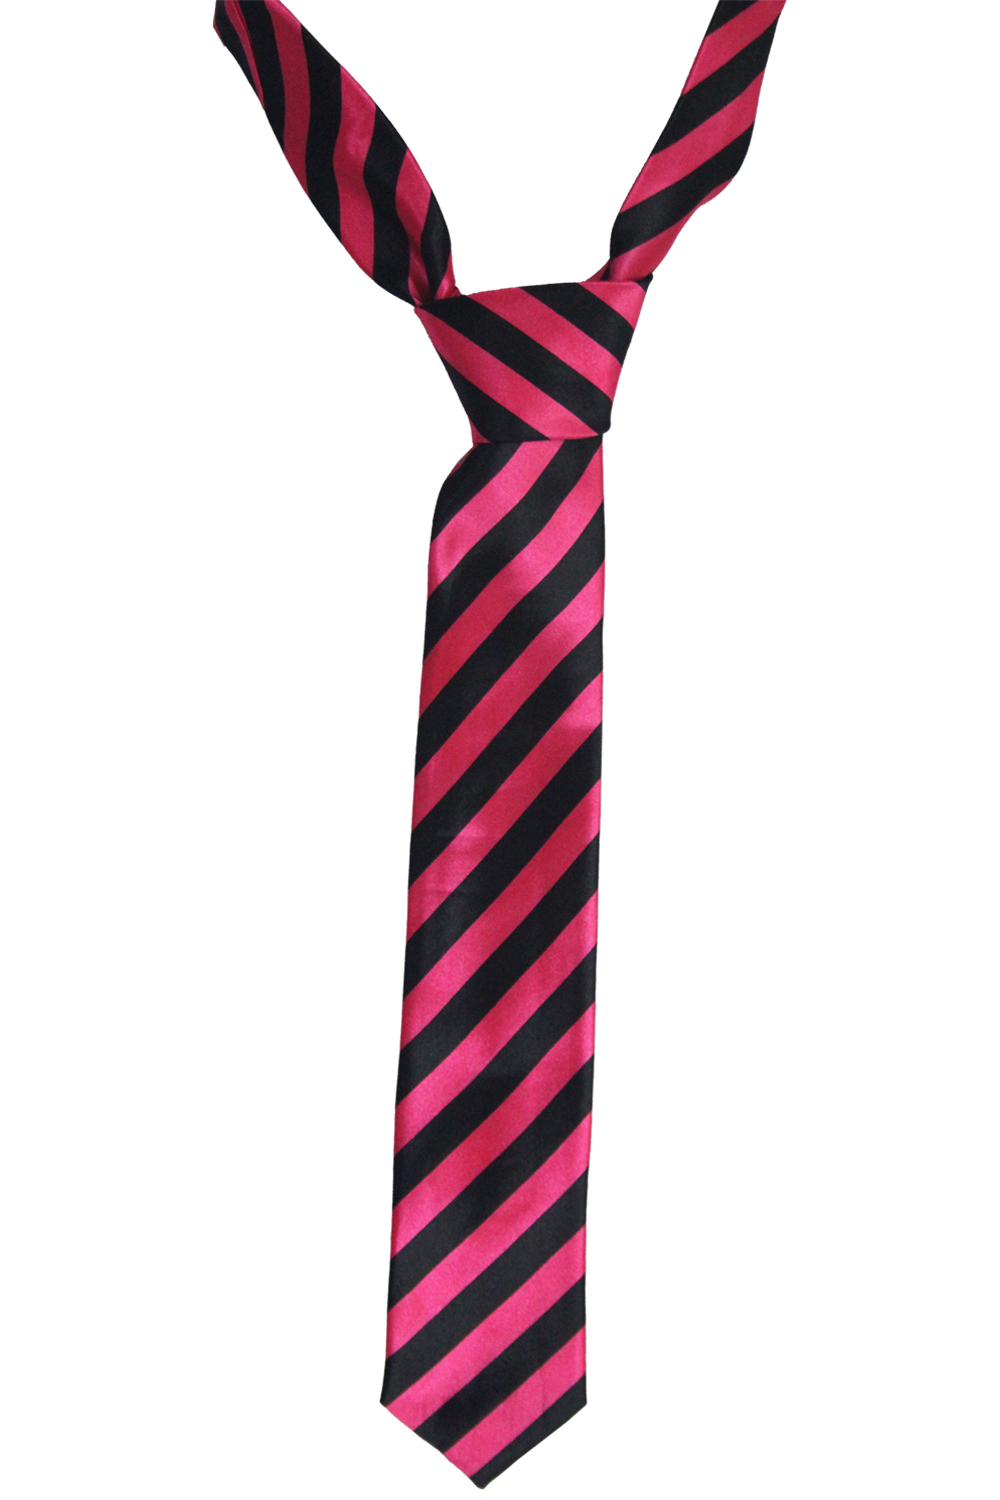 Satin Pink Black Striped Neck Tie